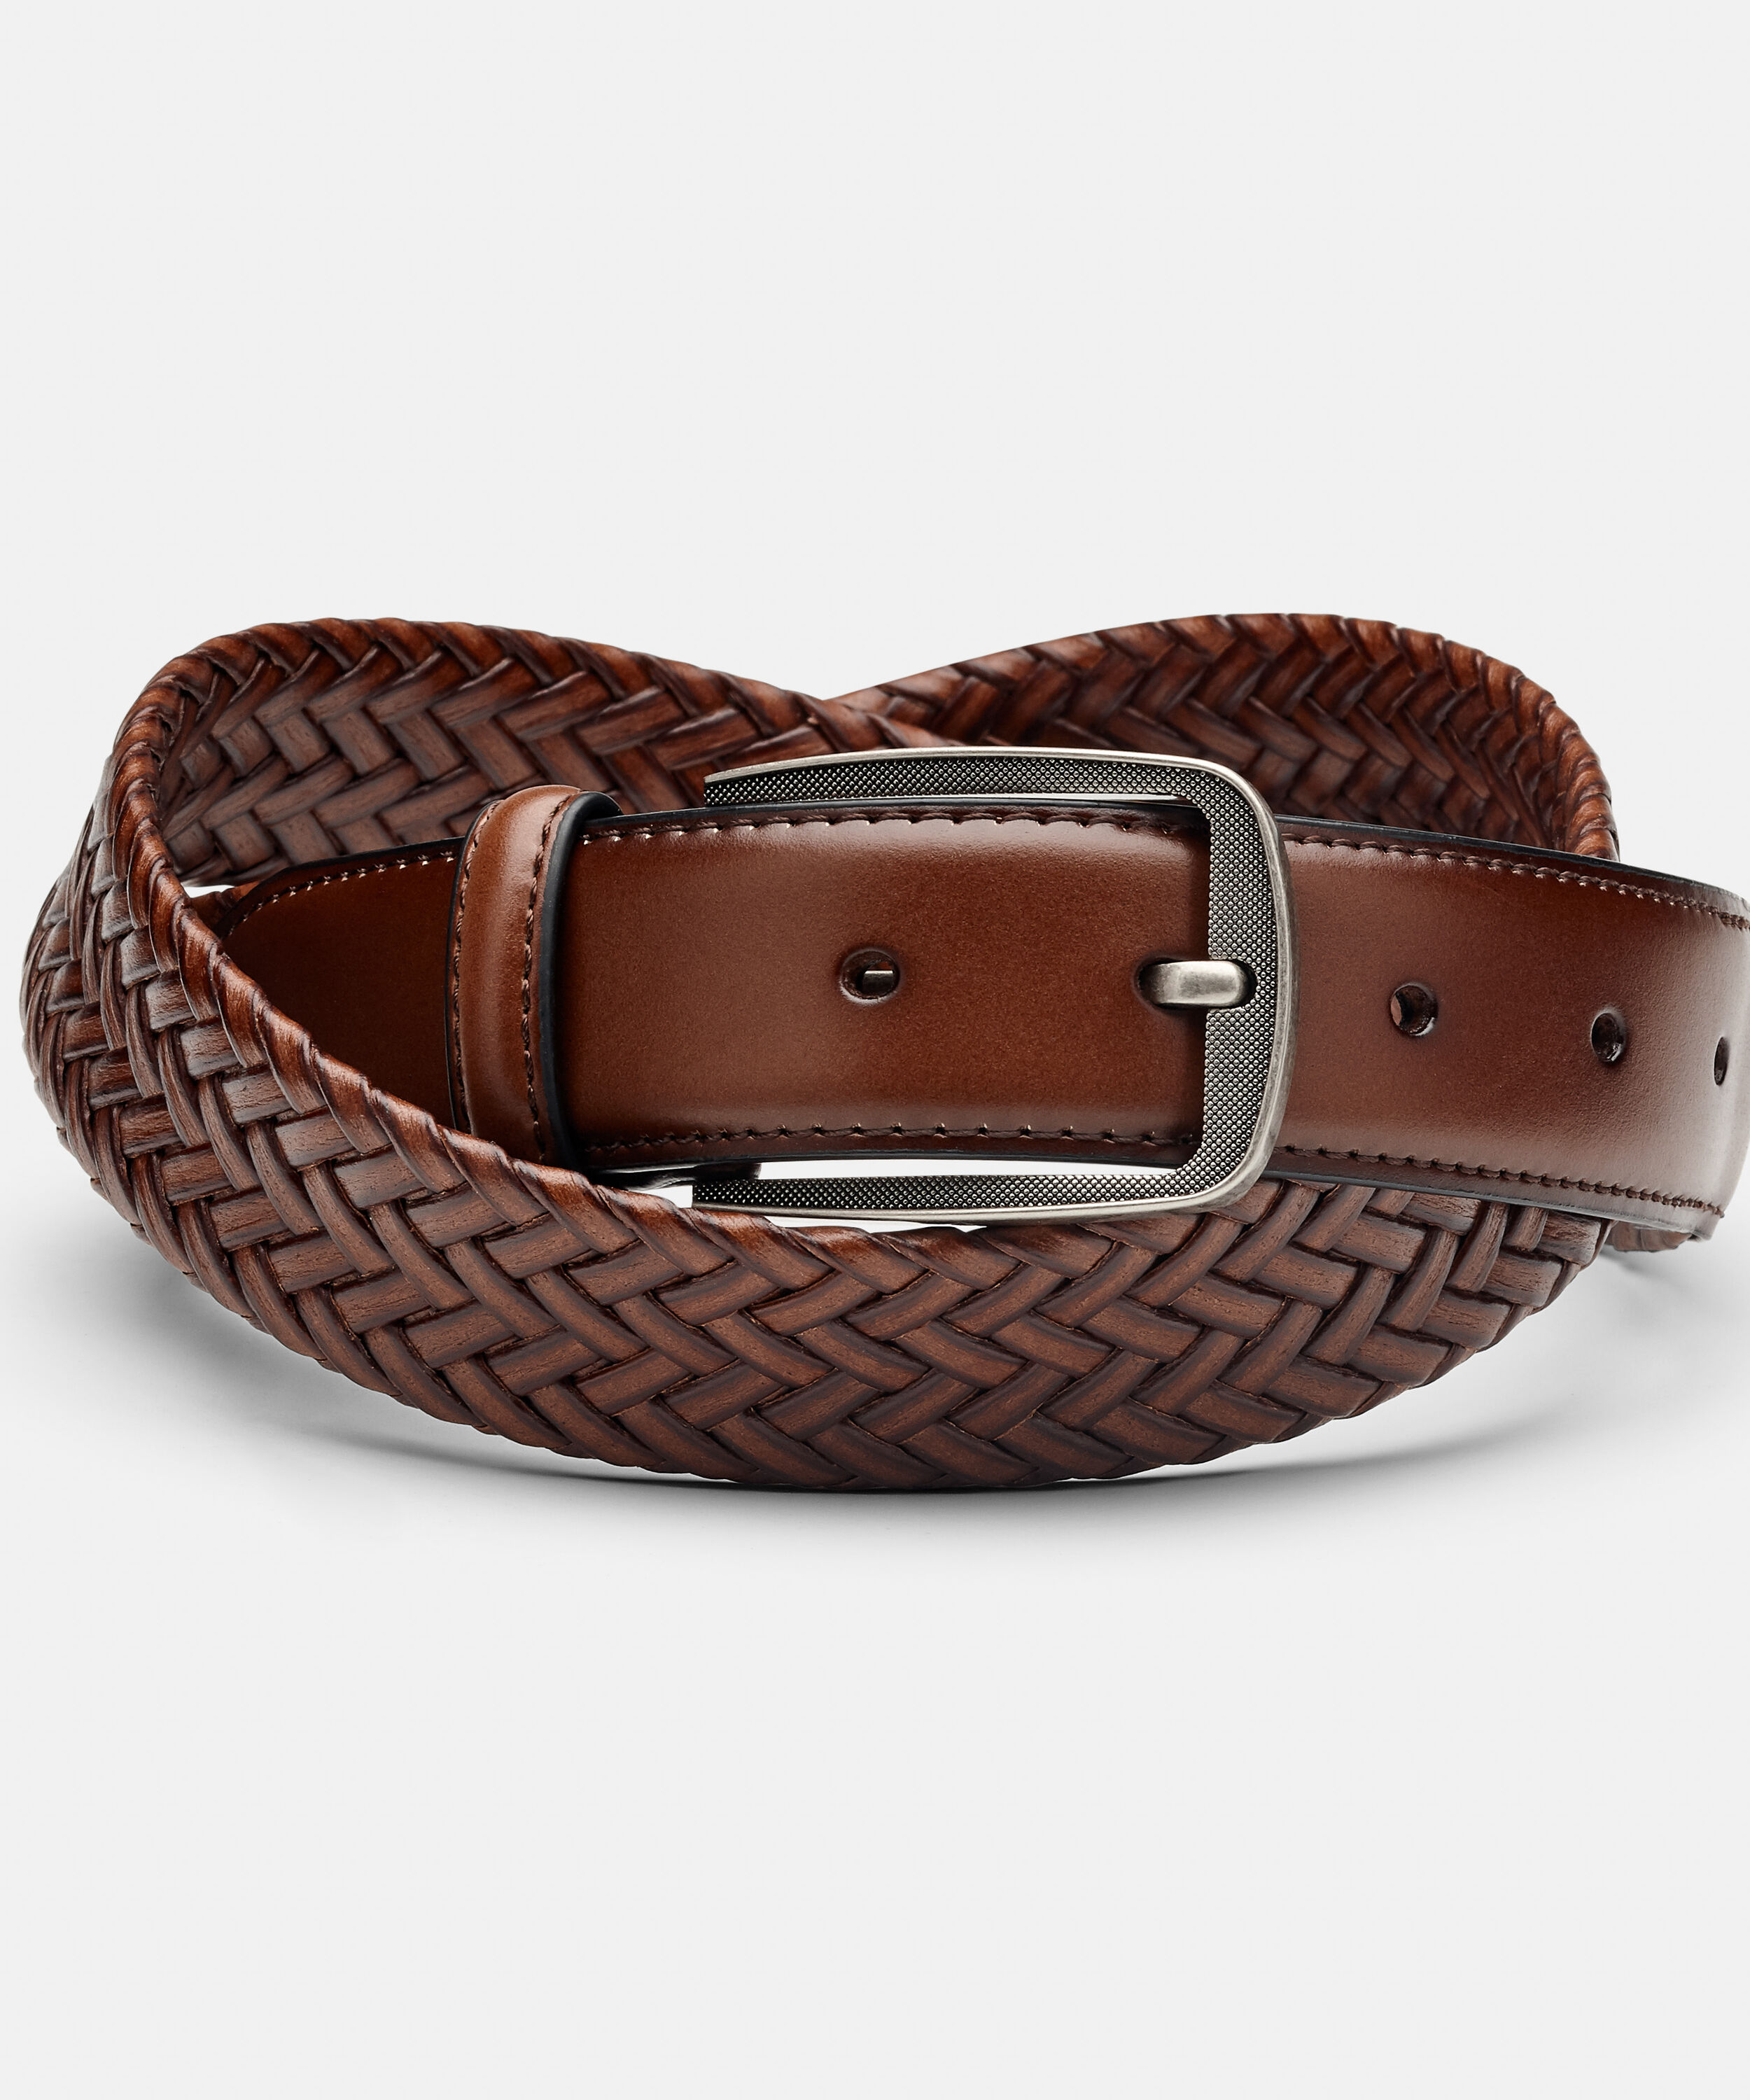 Darron - Tan - Woven Leather Belt Texture Buckle, Belts